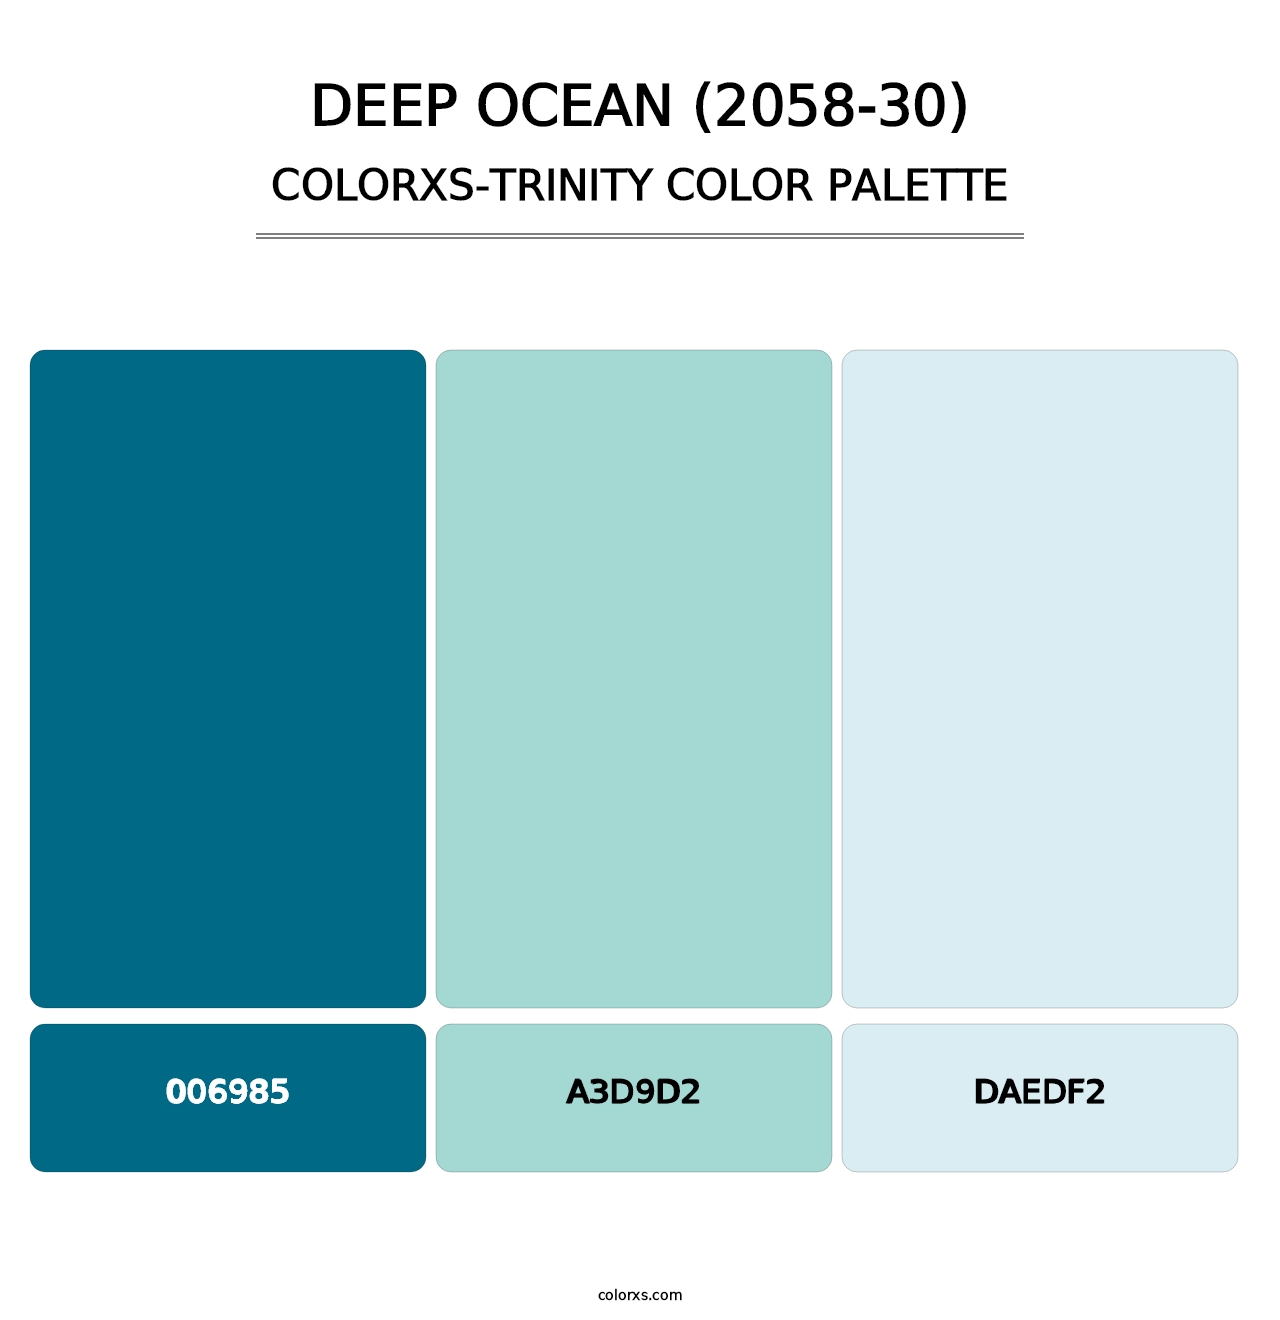 Deep Ocean (2058-30) - Colorxs Trinity Palette